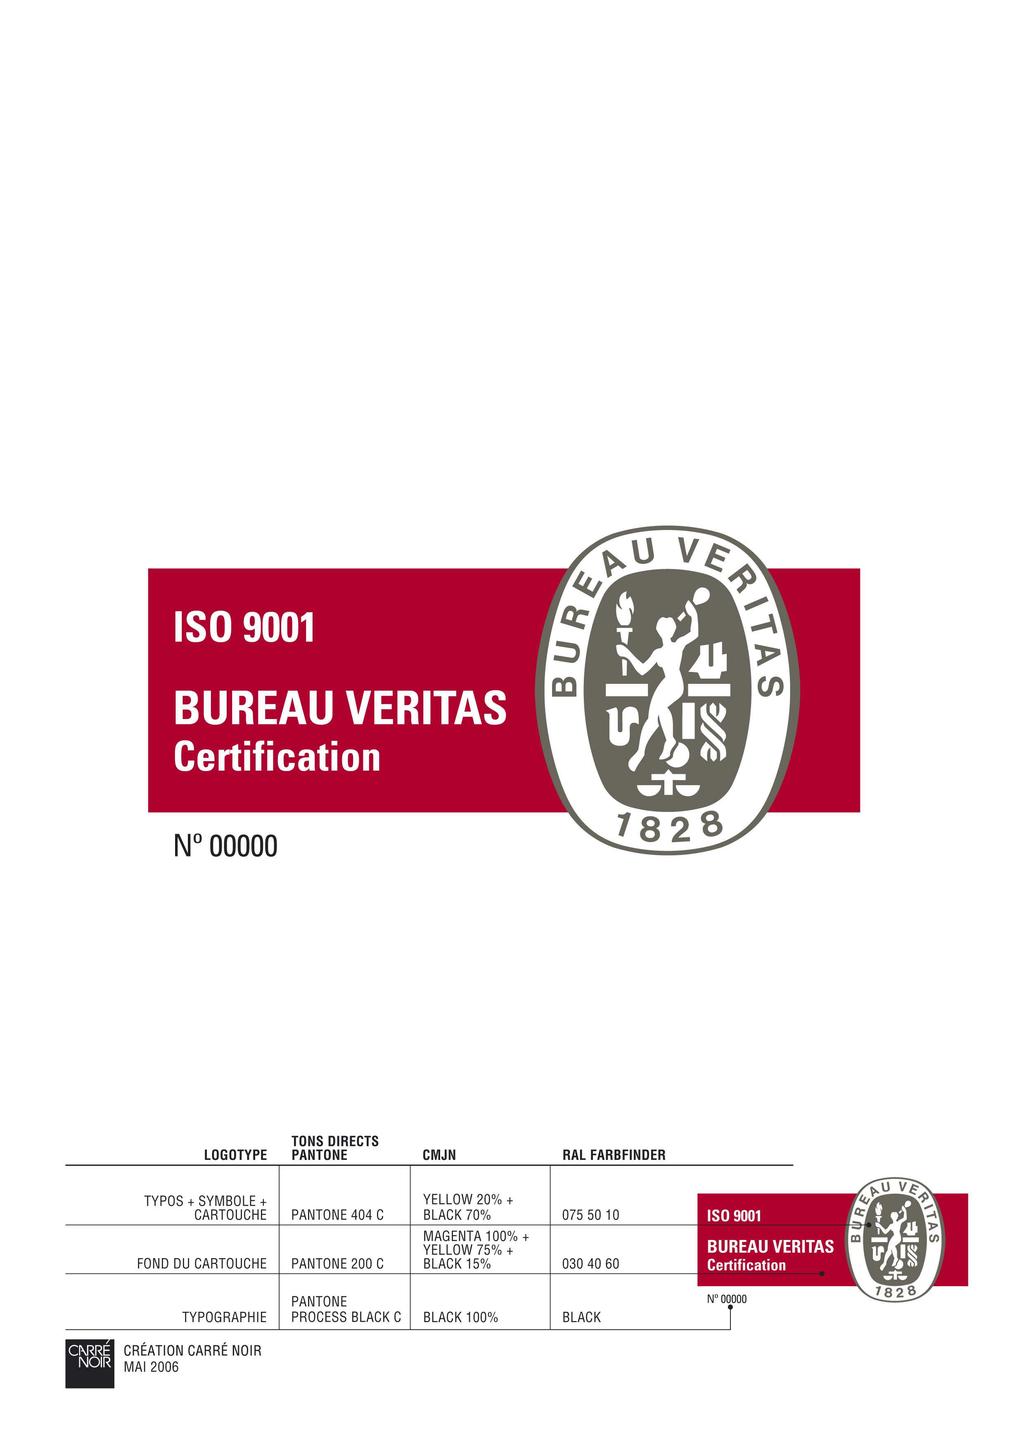 2 INTRODUCING THE CERTIFICATION MARK COLORS COLOR PRINTING The Bureau Veritas certification mark is printed in two colors: Pantone 404 C grey, Pantone 200 C red.